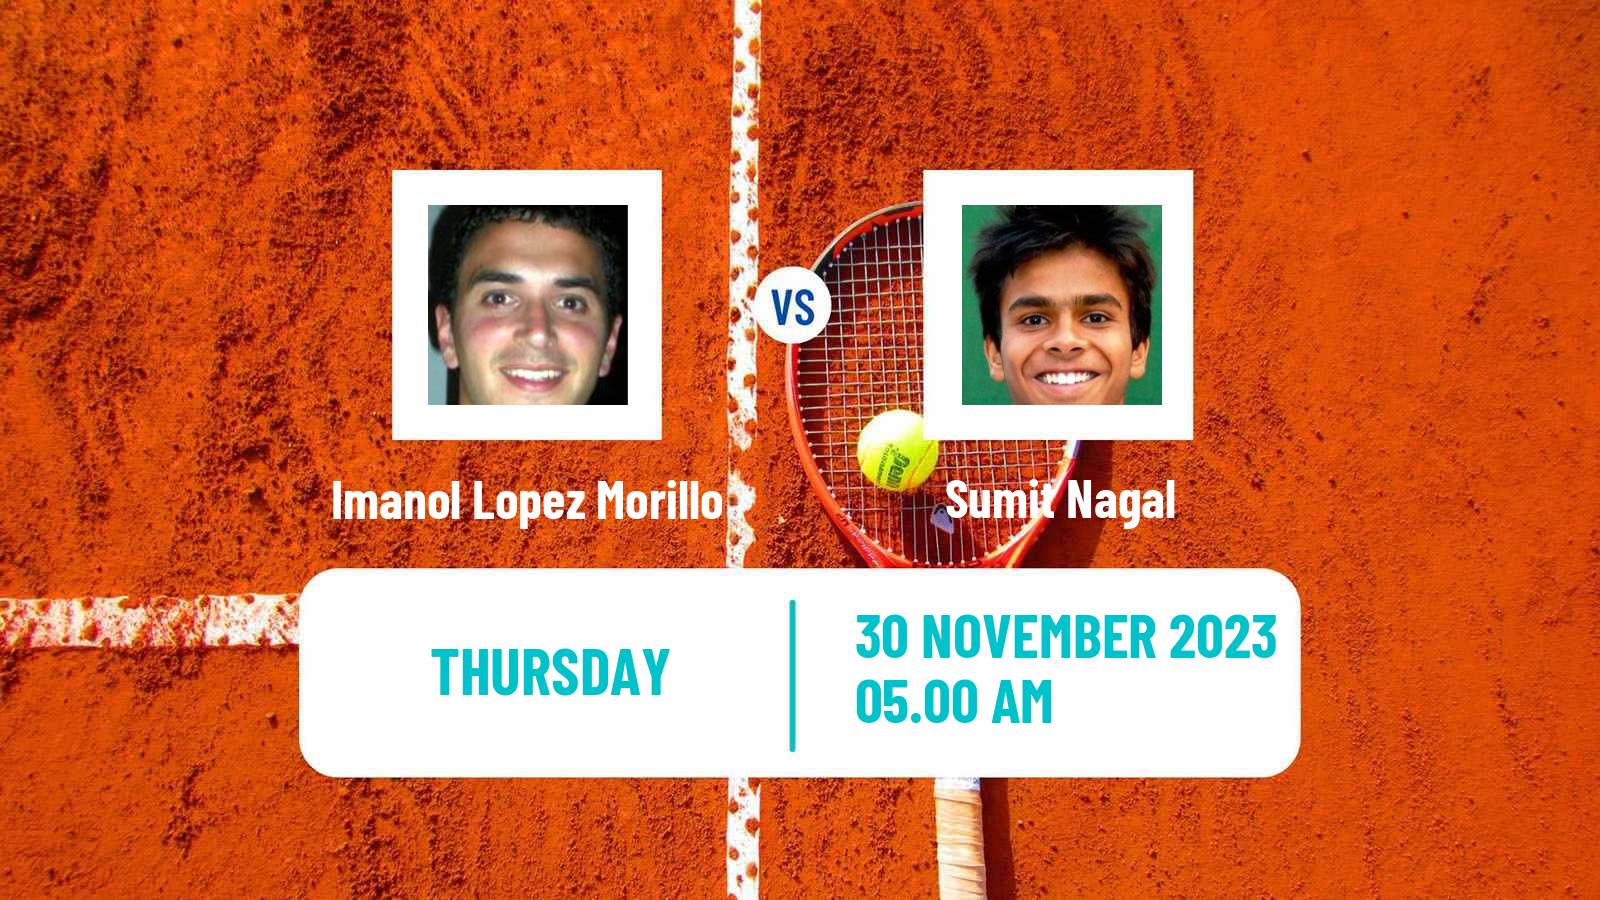 Tennis Maspalomas Challenger Men Imanol Lopez Morillo - Sumit Nagal